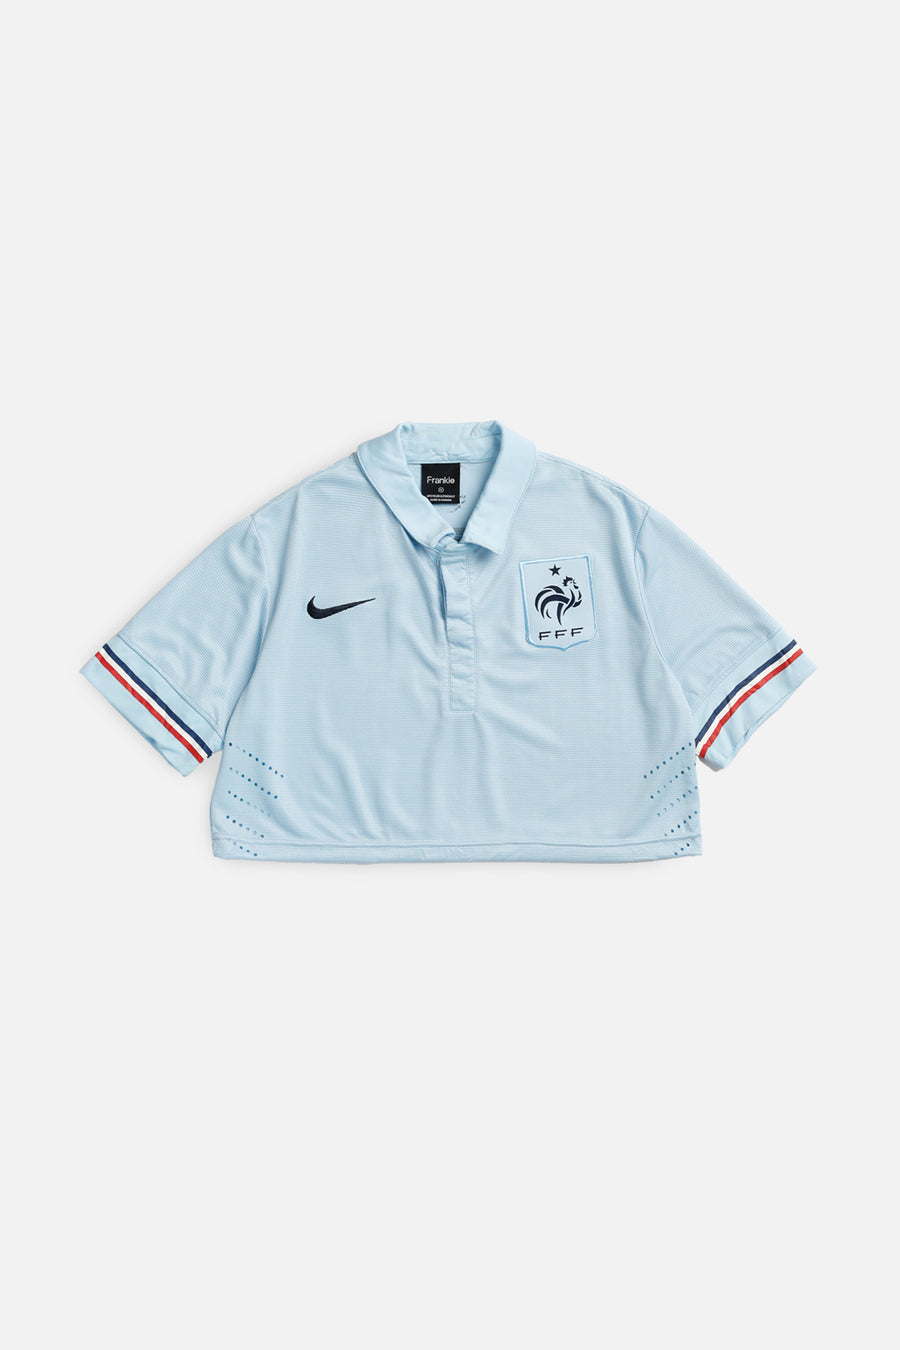 Rework Crop France Soccer Jersey - M